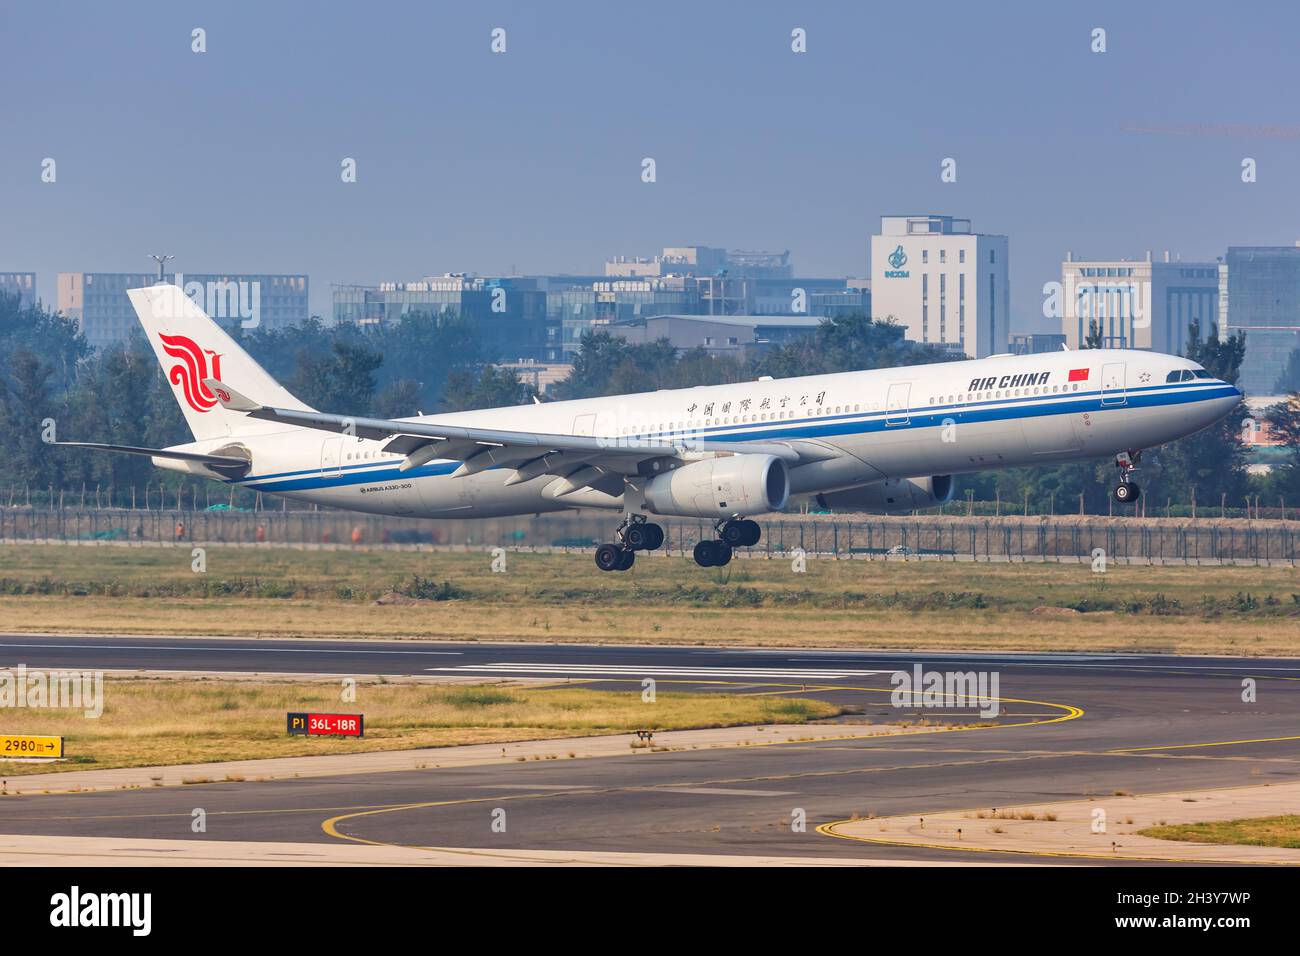 Air China Airbus A330-300 aircraft Beijing airport in China Stock Photo